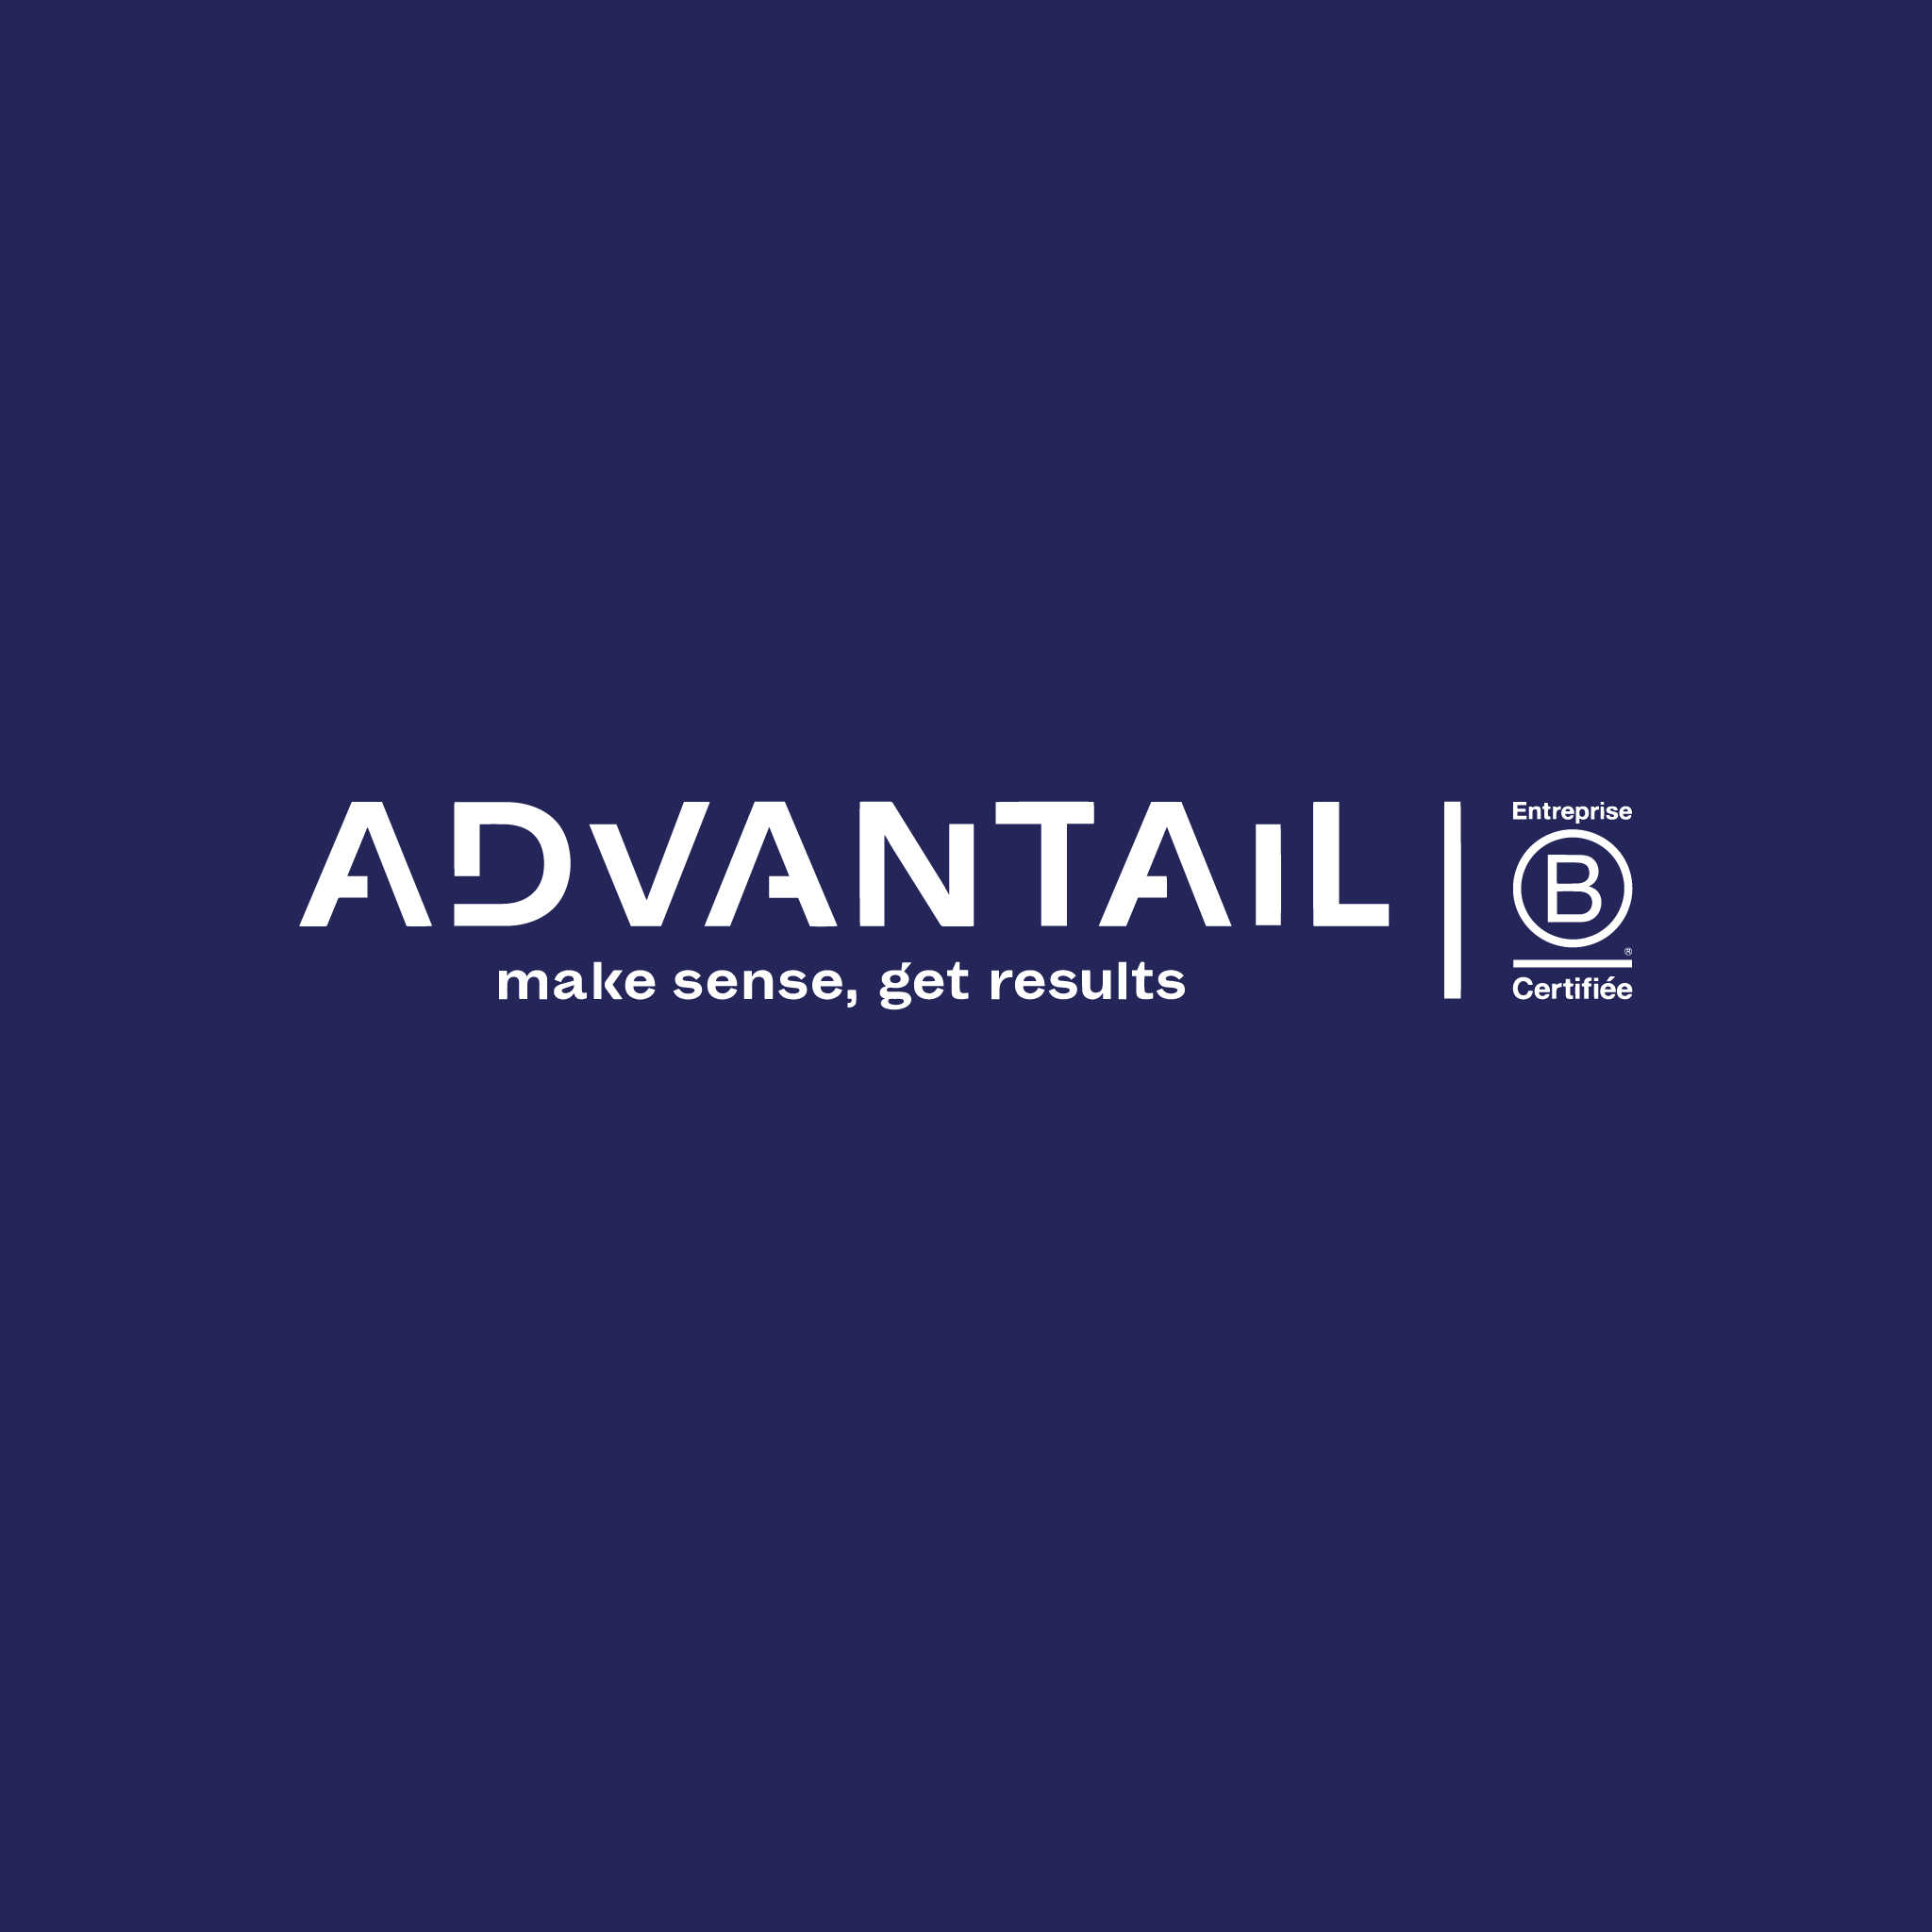 logo-advantail-bcorp3-aspect-ratio-600-600